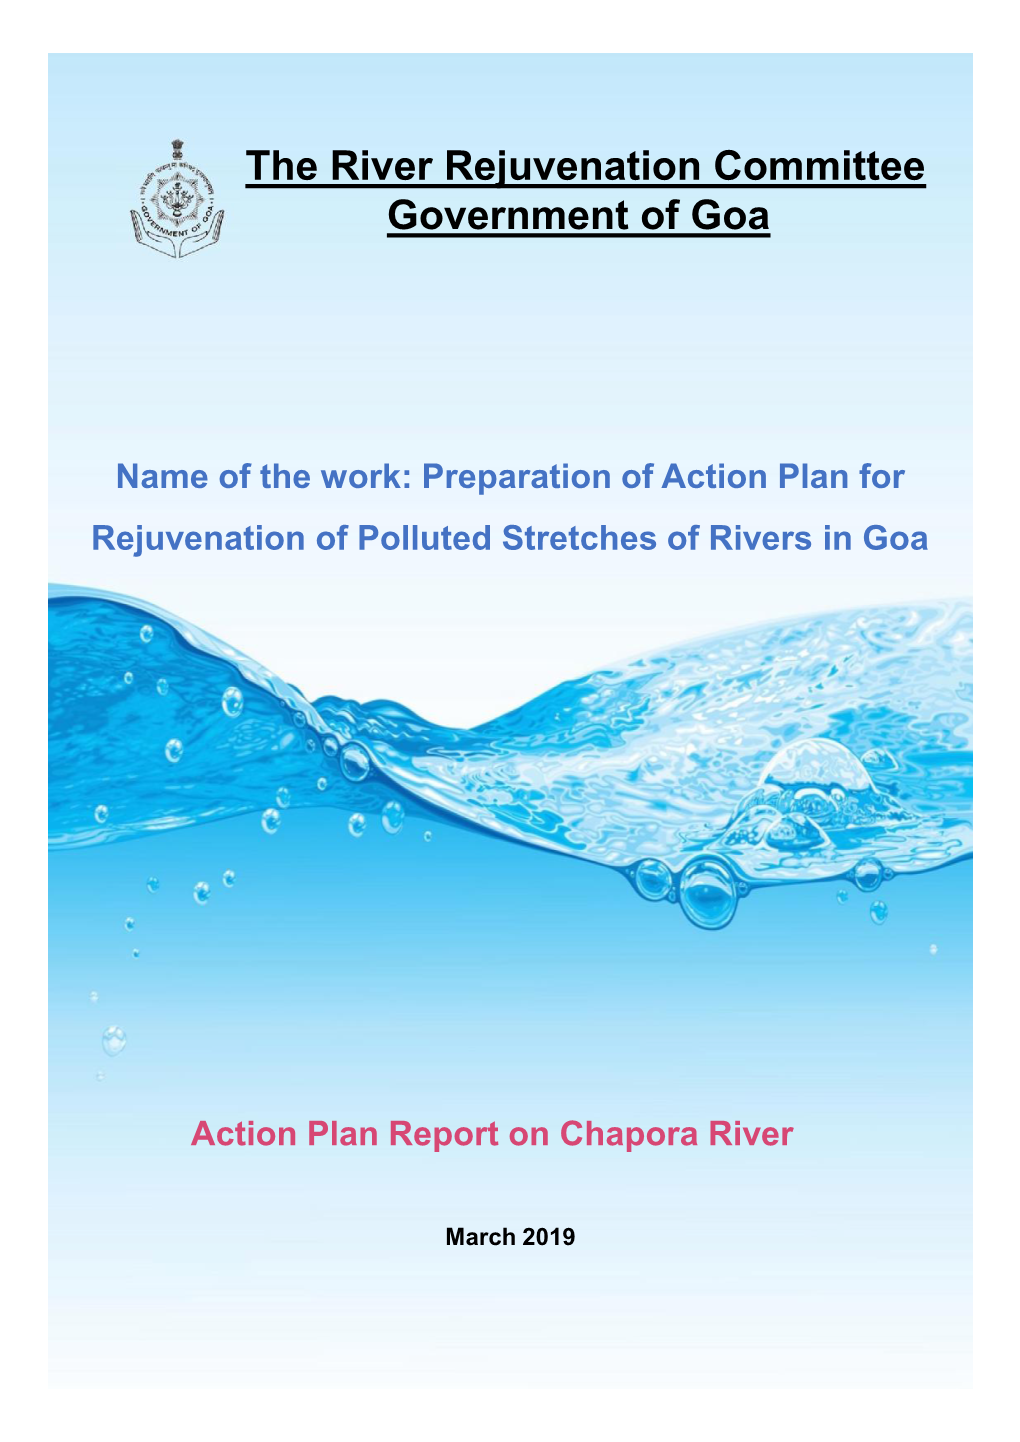 Chapora River Action Plan